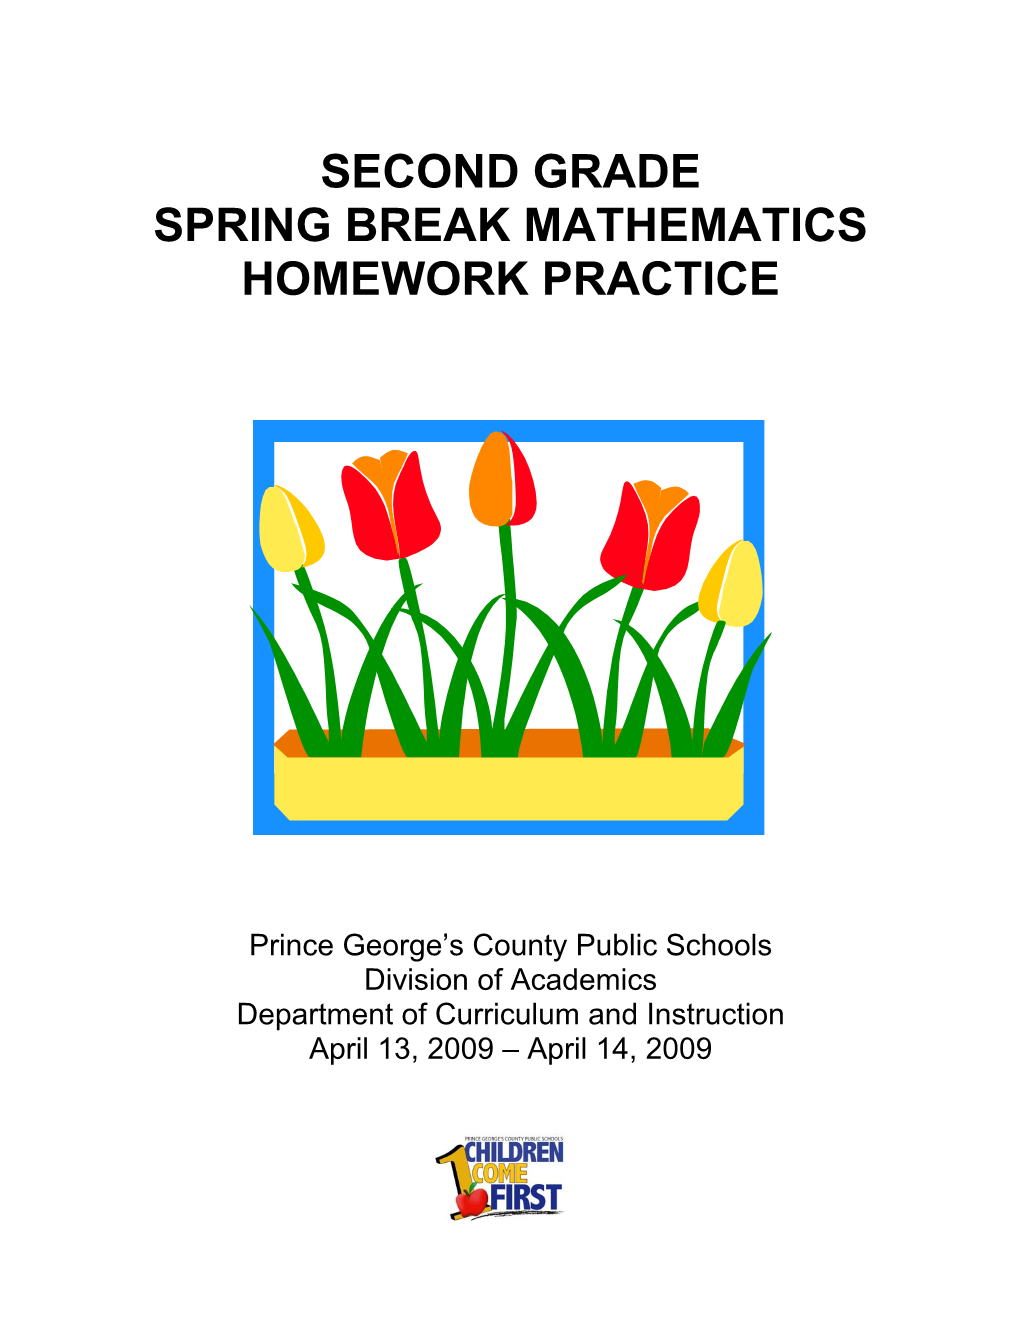 Spring Break Mathematics Homework Practice